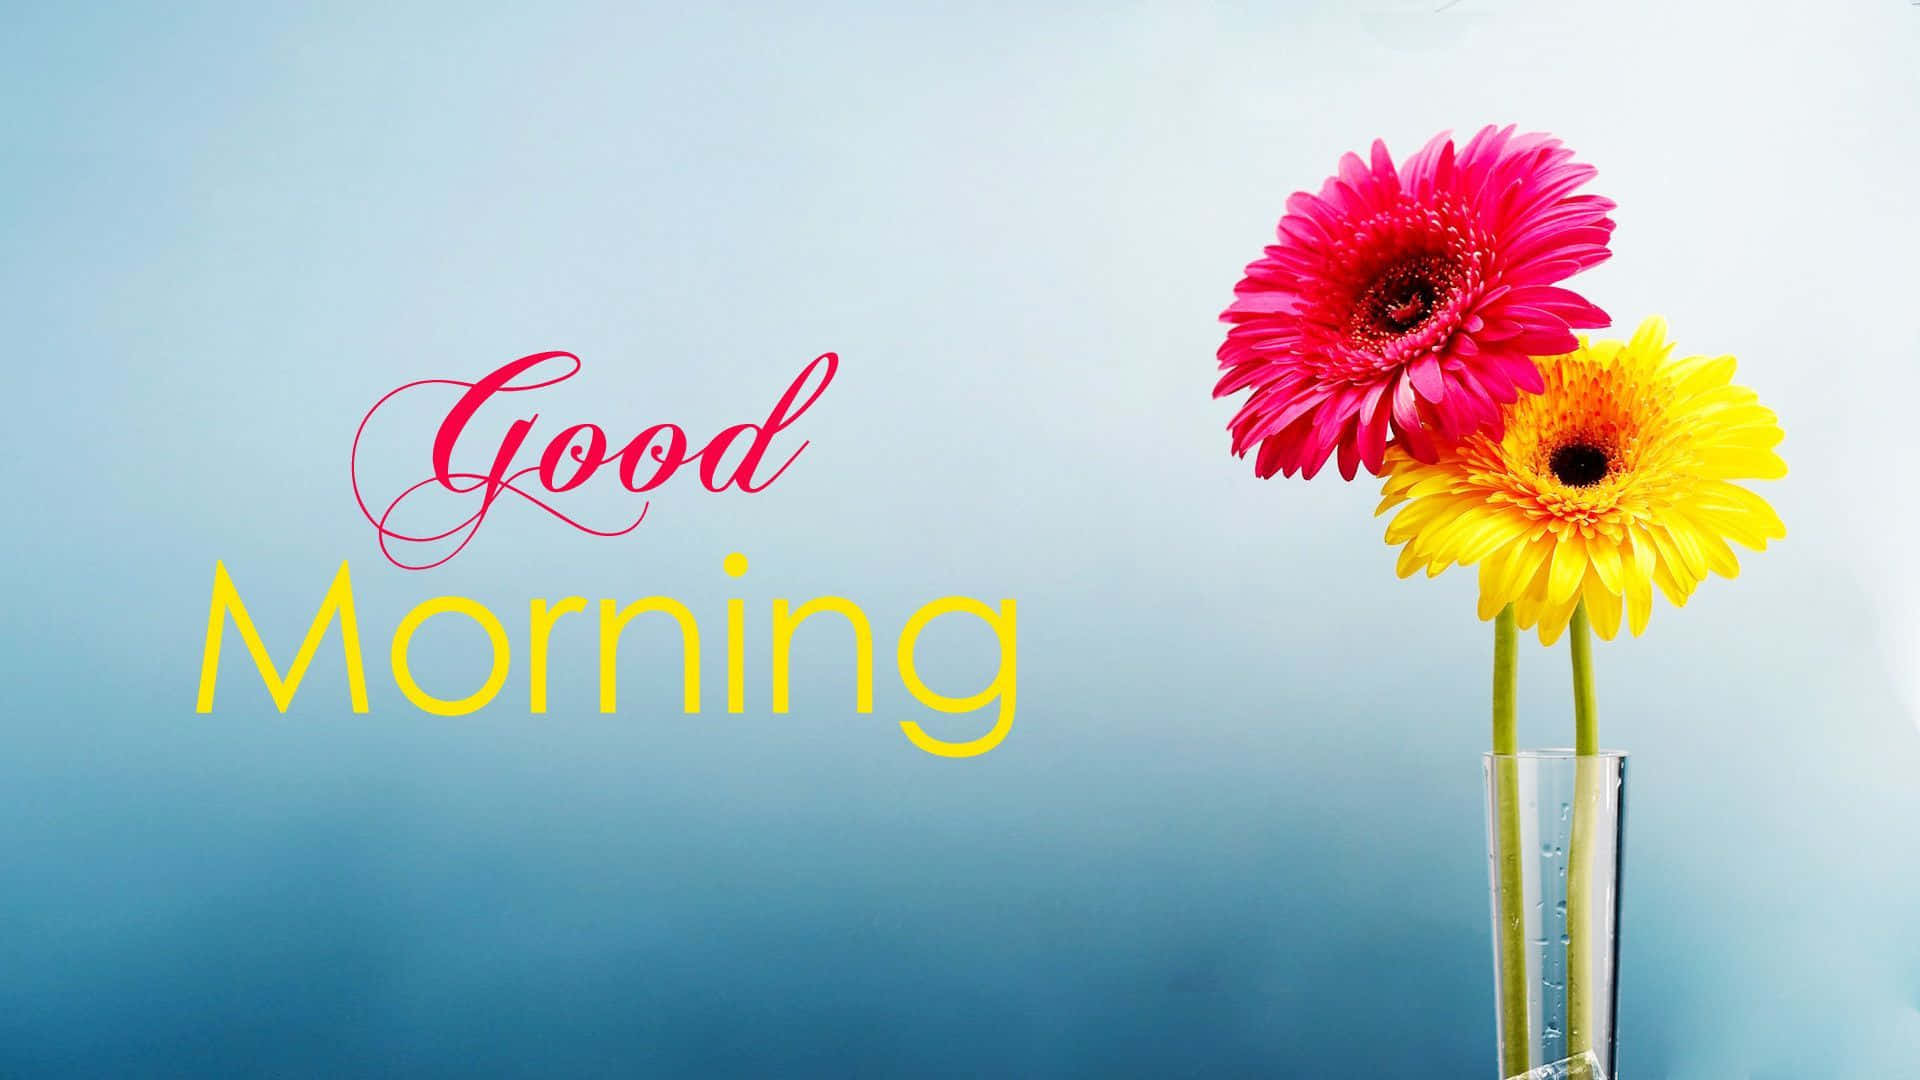 My beautiful morning. Good morning картинки. Good morning цветы. Good morning картинки красивые. Best Wishes фон.